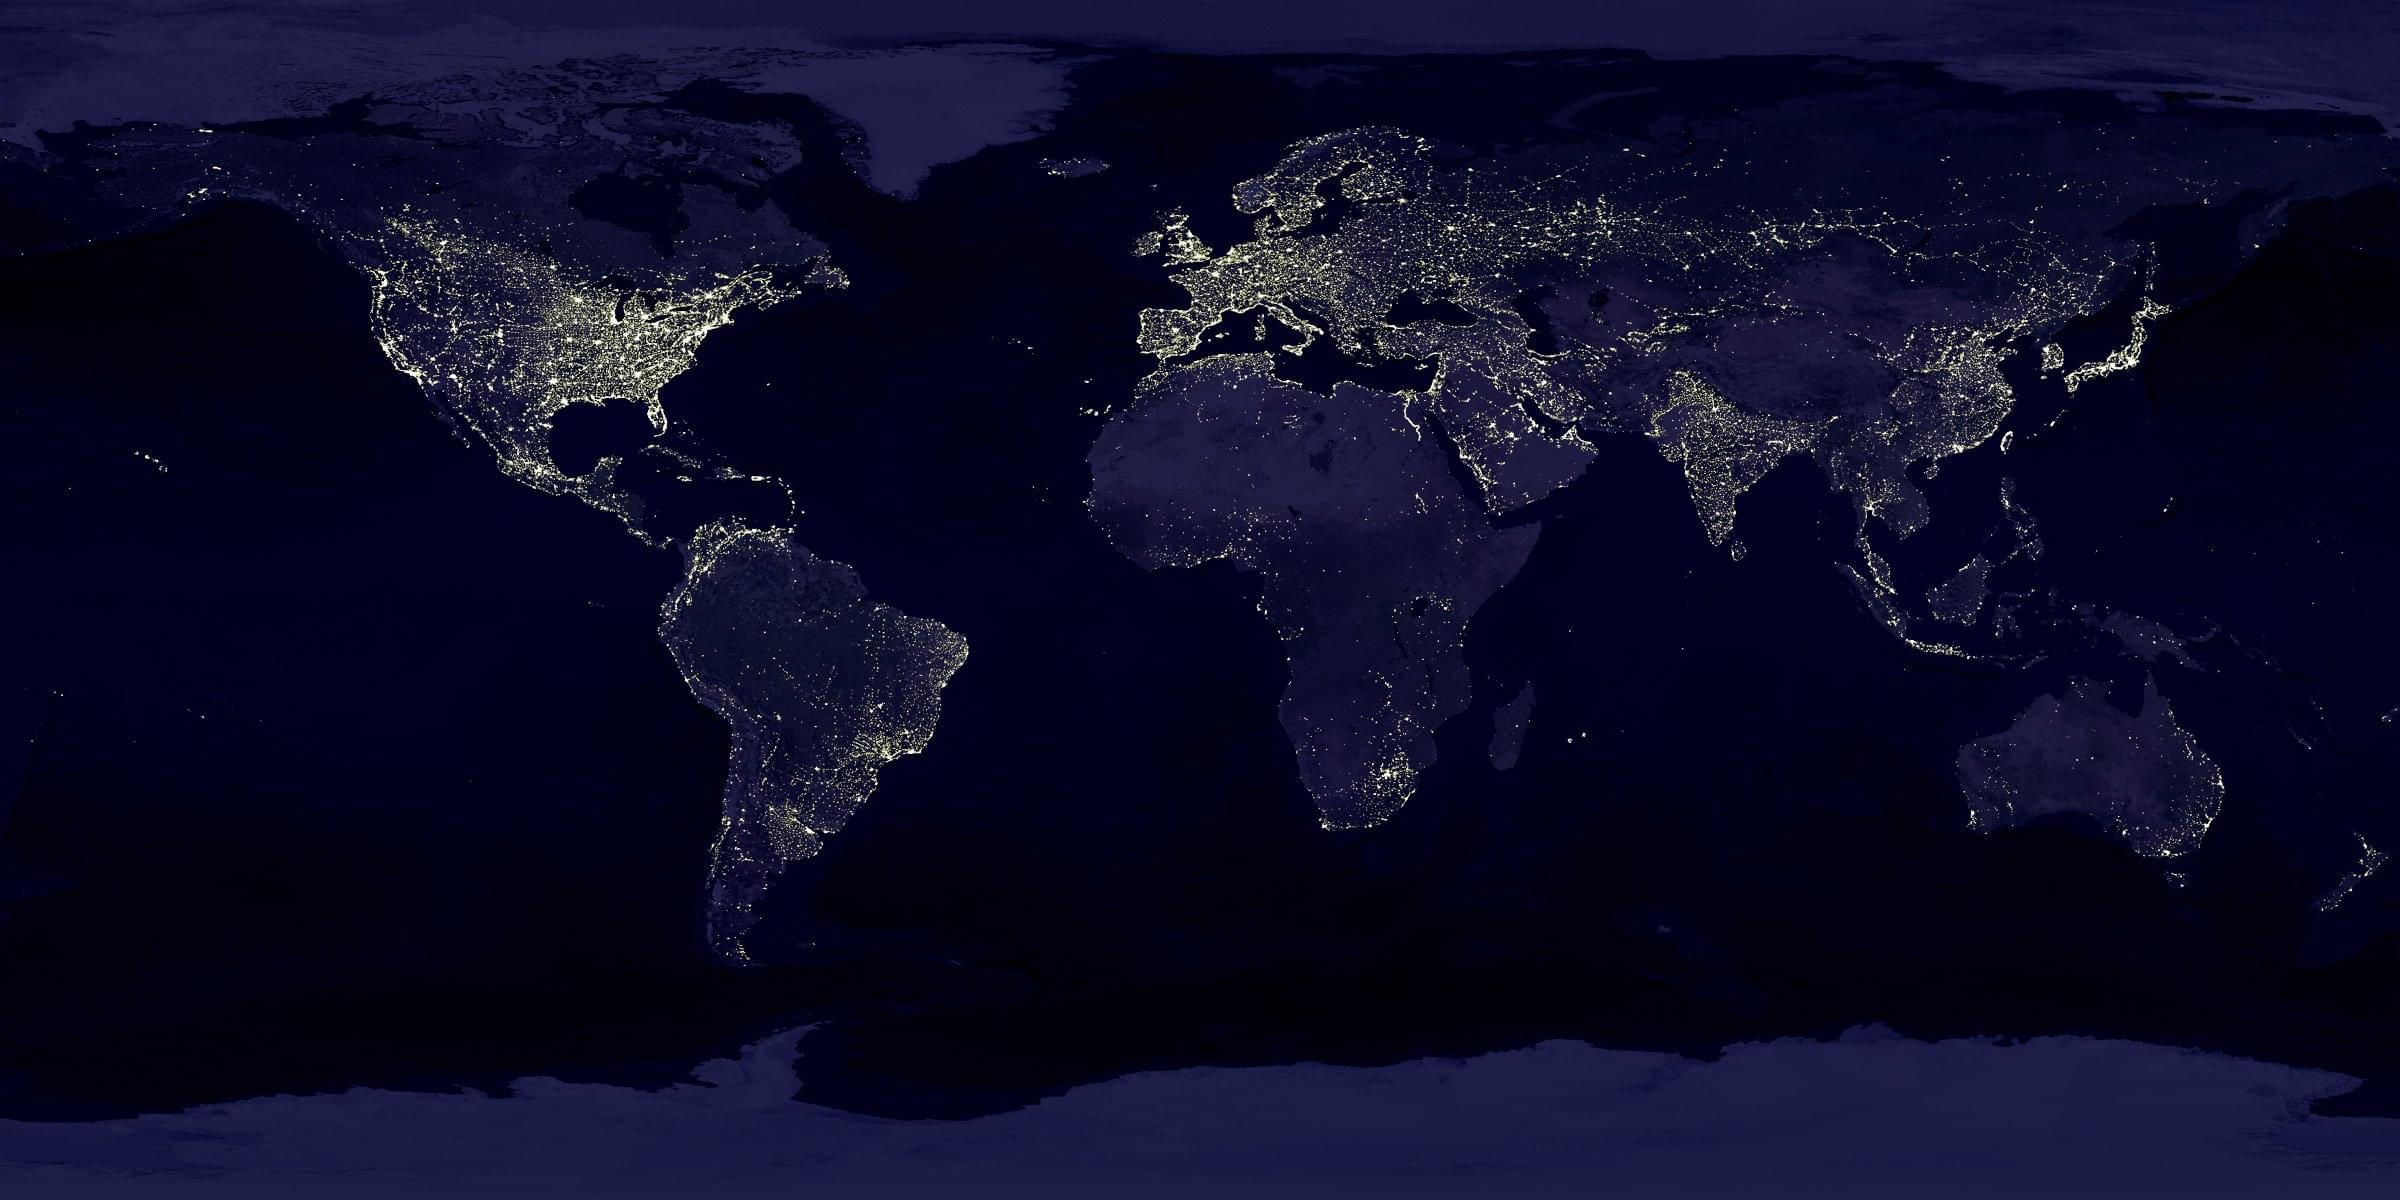 Earth view at night